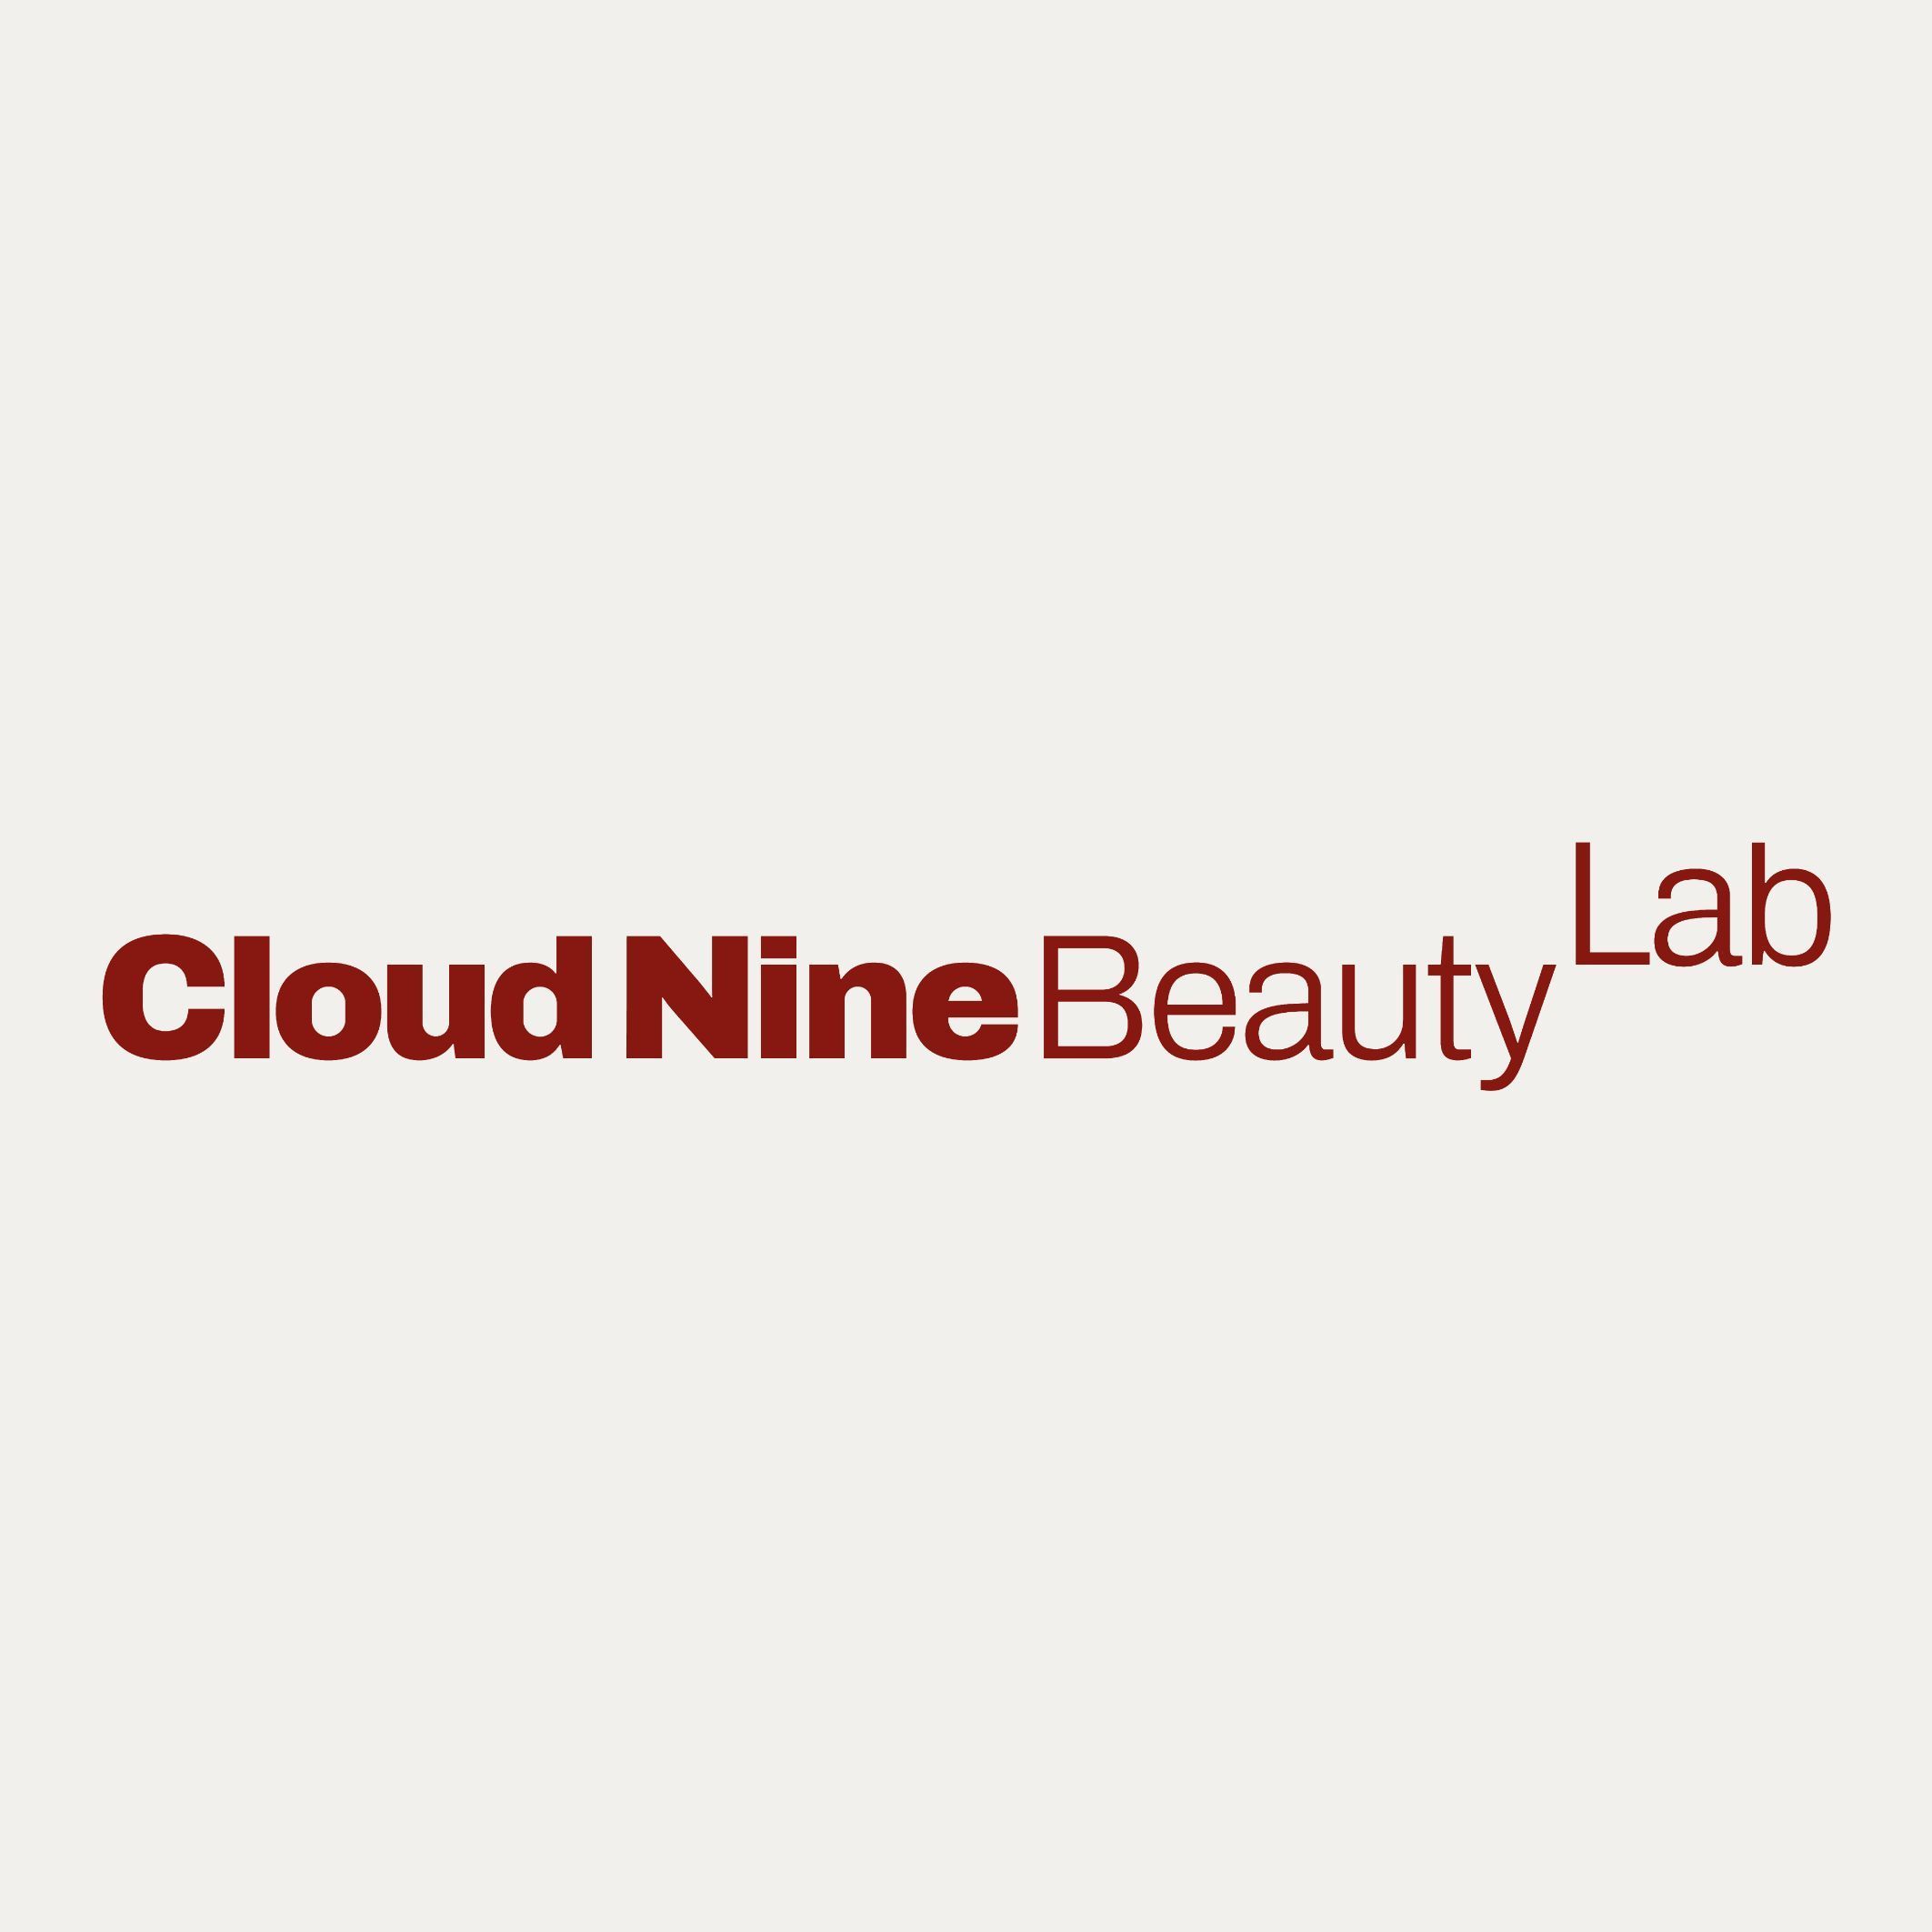 Cloud Nine Beauty Lab, Rúa Vista, 18, 15003, A Coruña